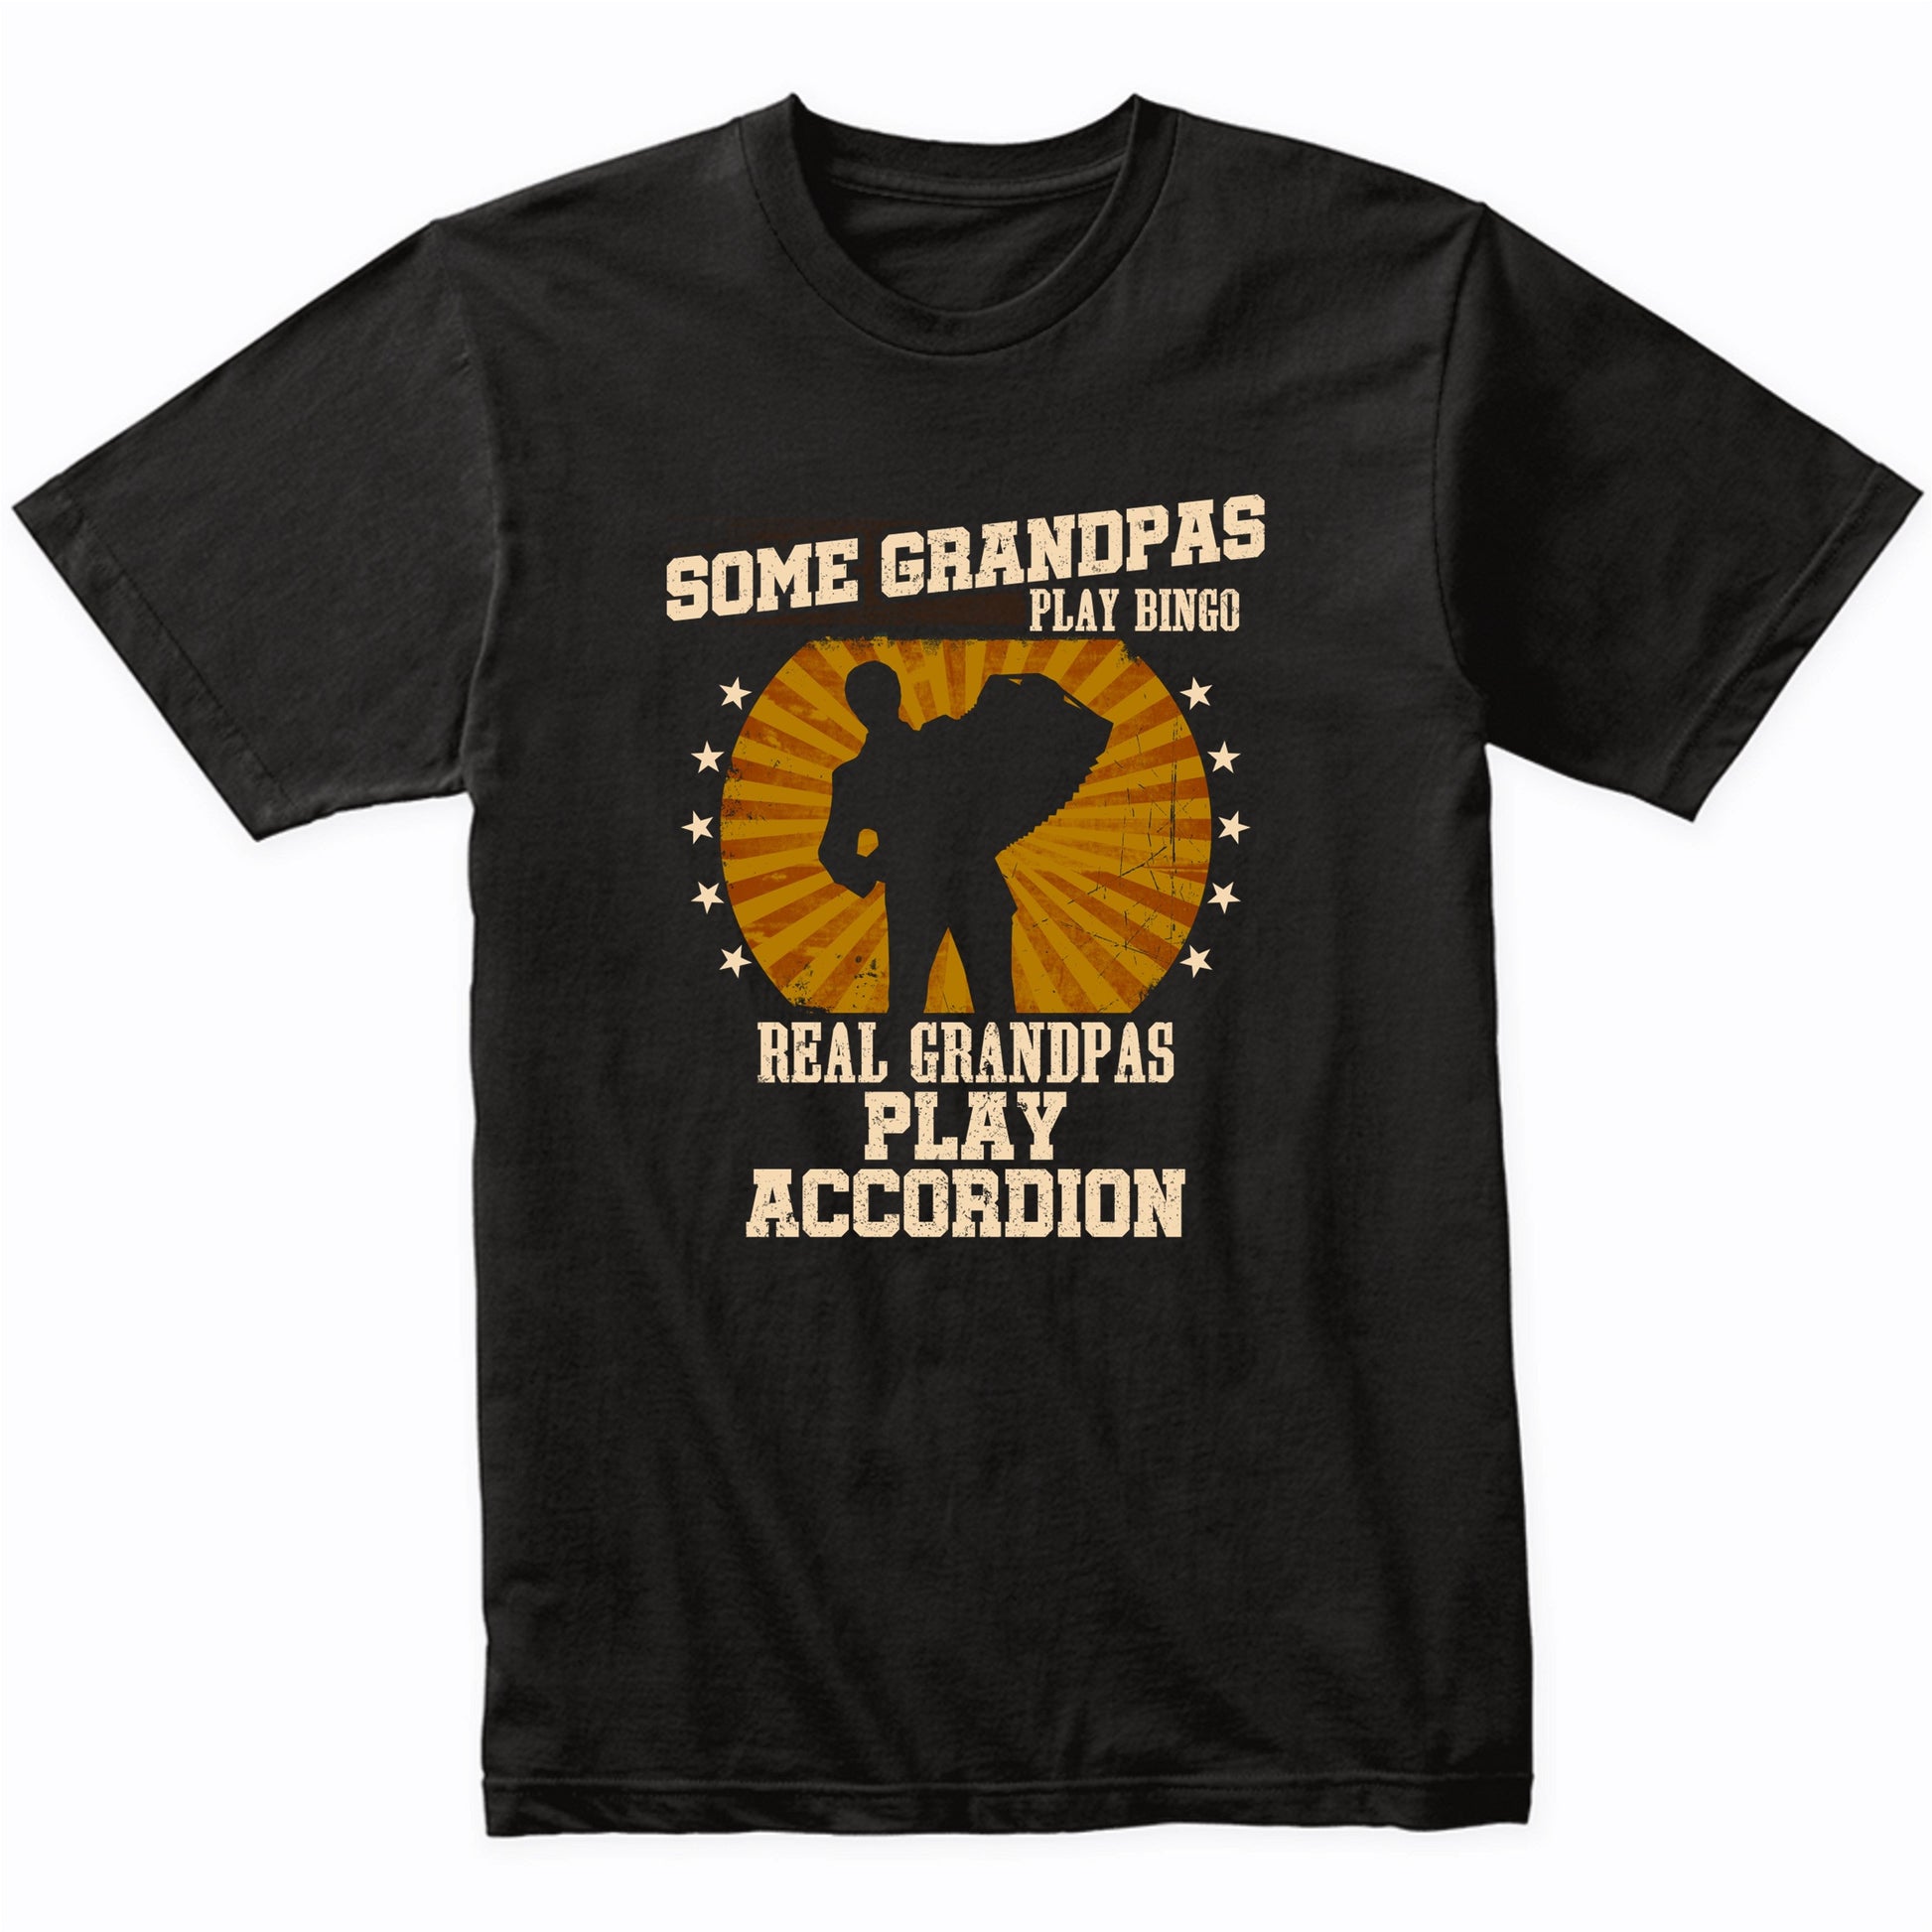 Accordion Grandpa Shirt - Real Grandpas Play Accordion T-Shirt